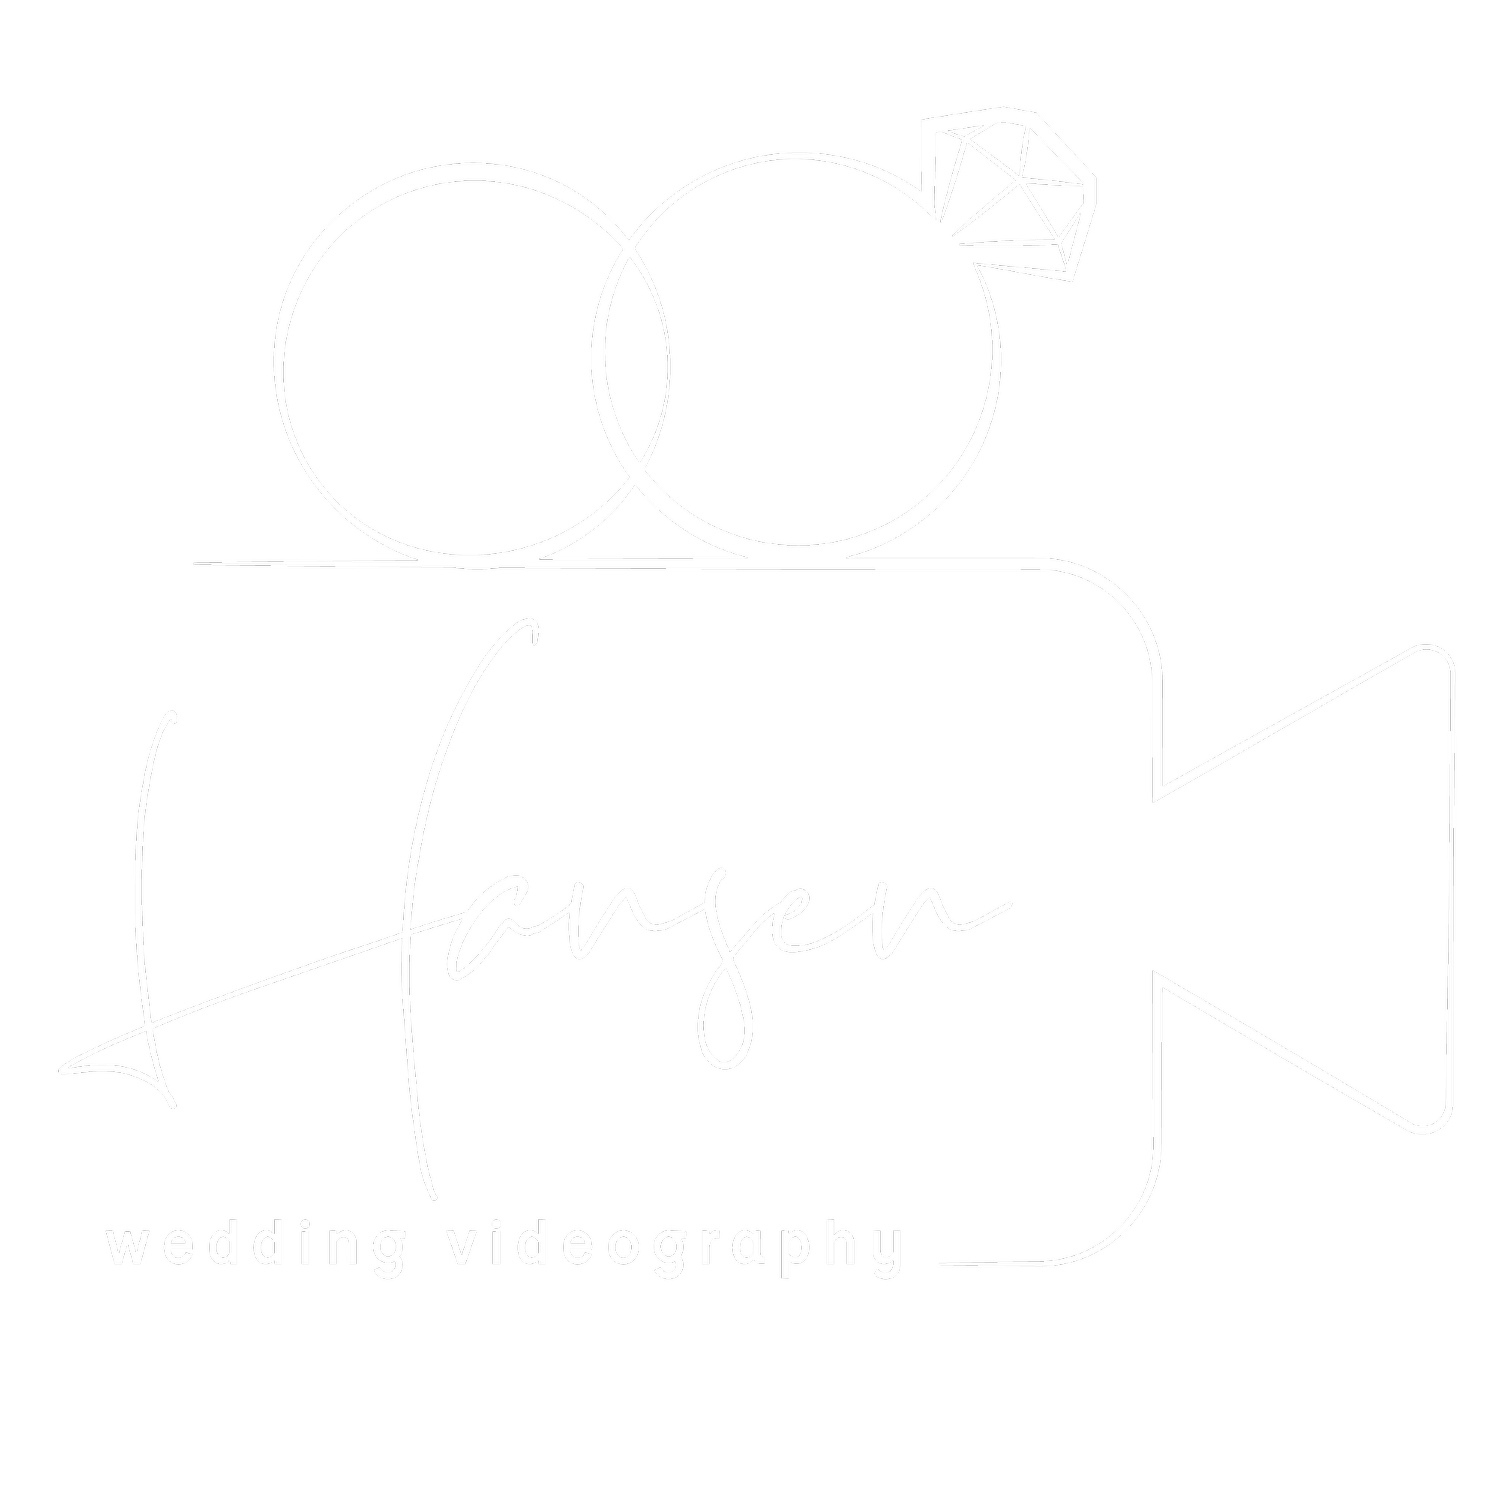 Hansen Wedding Videography